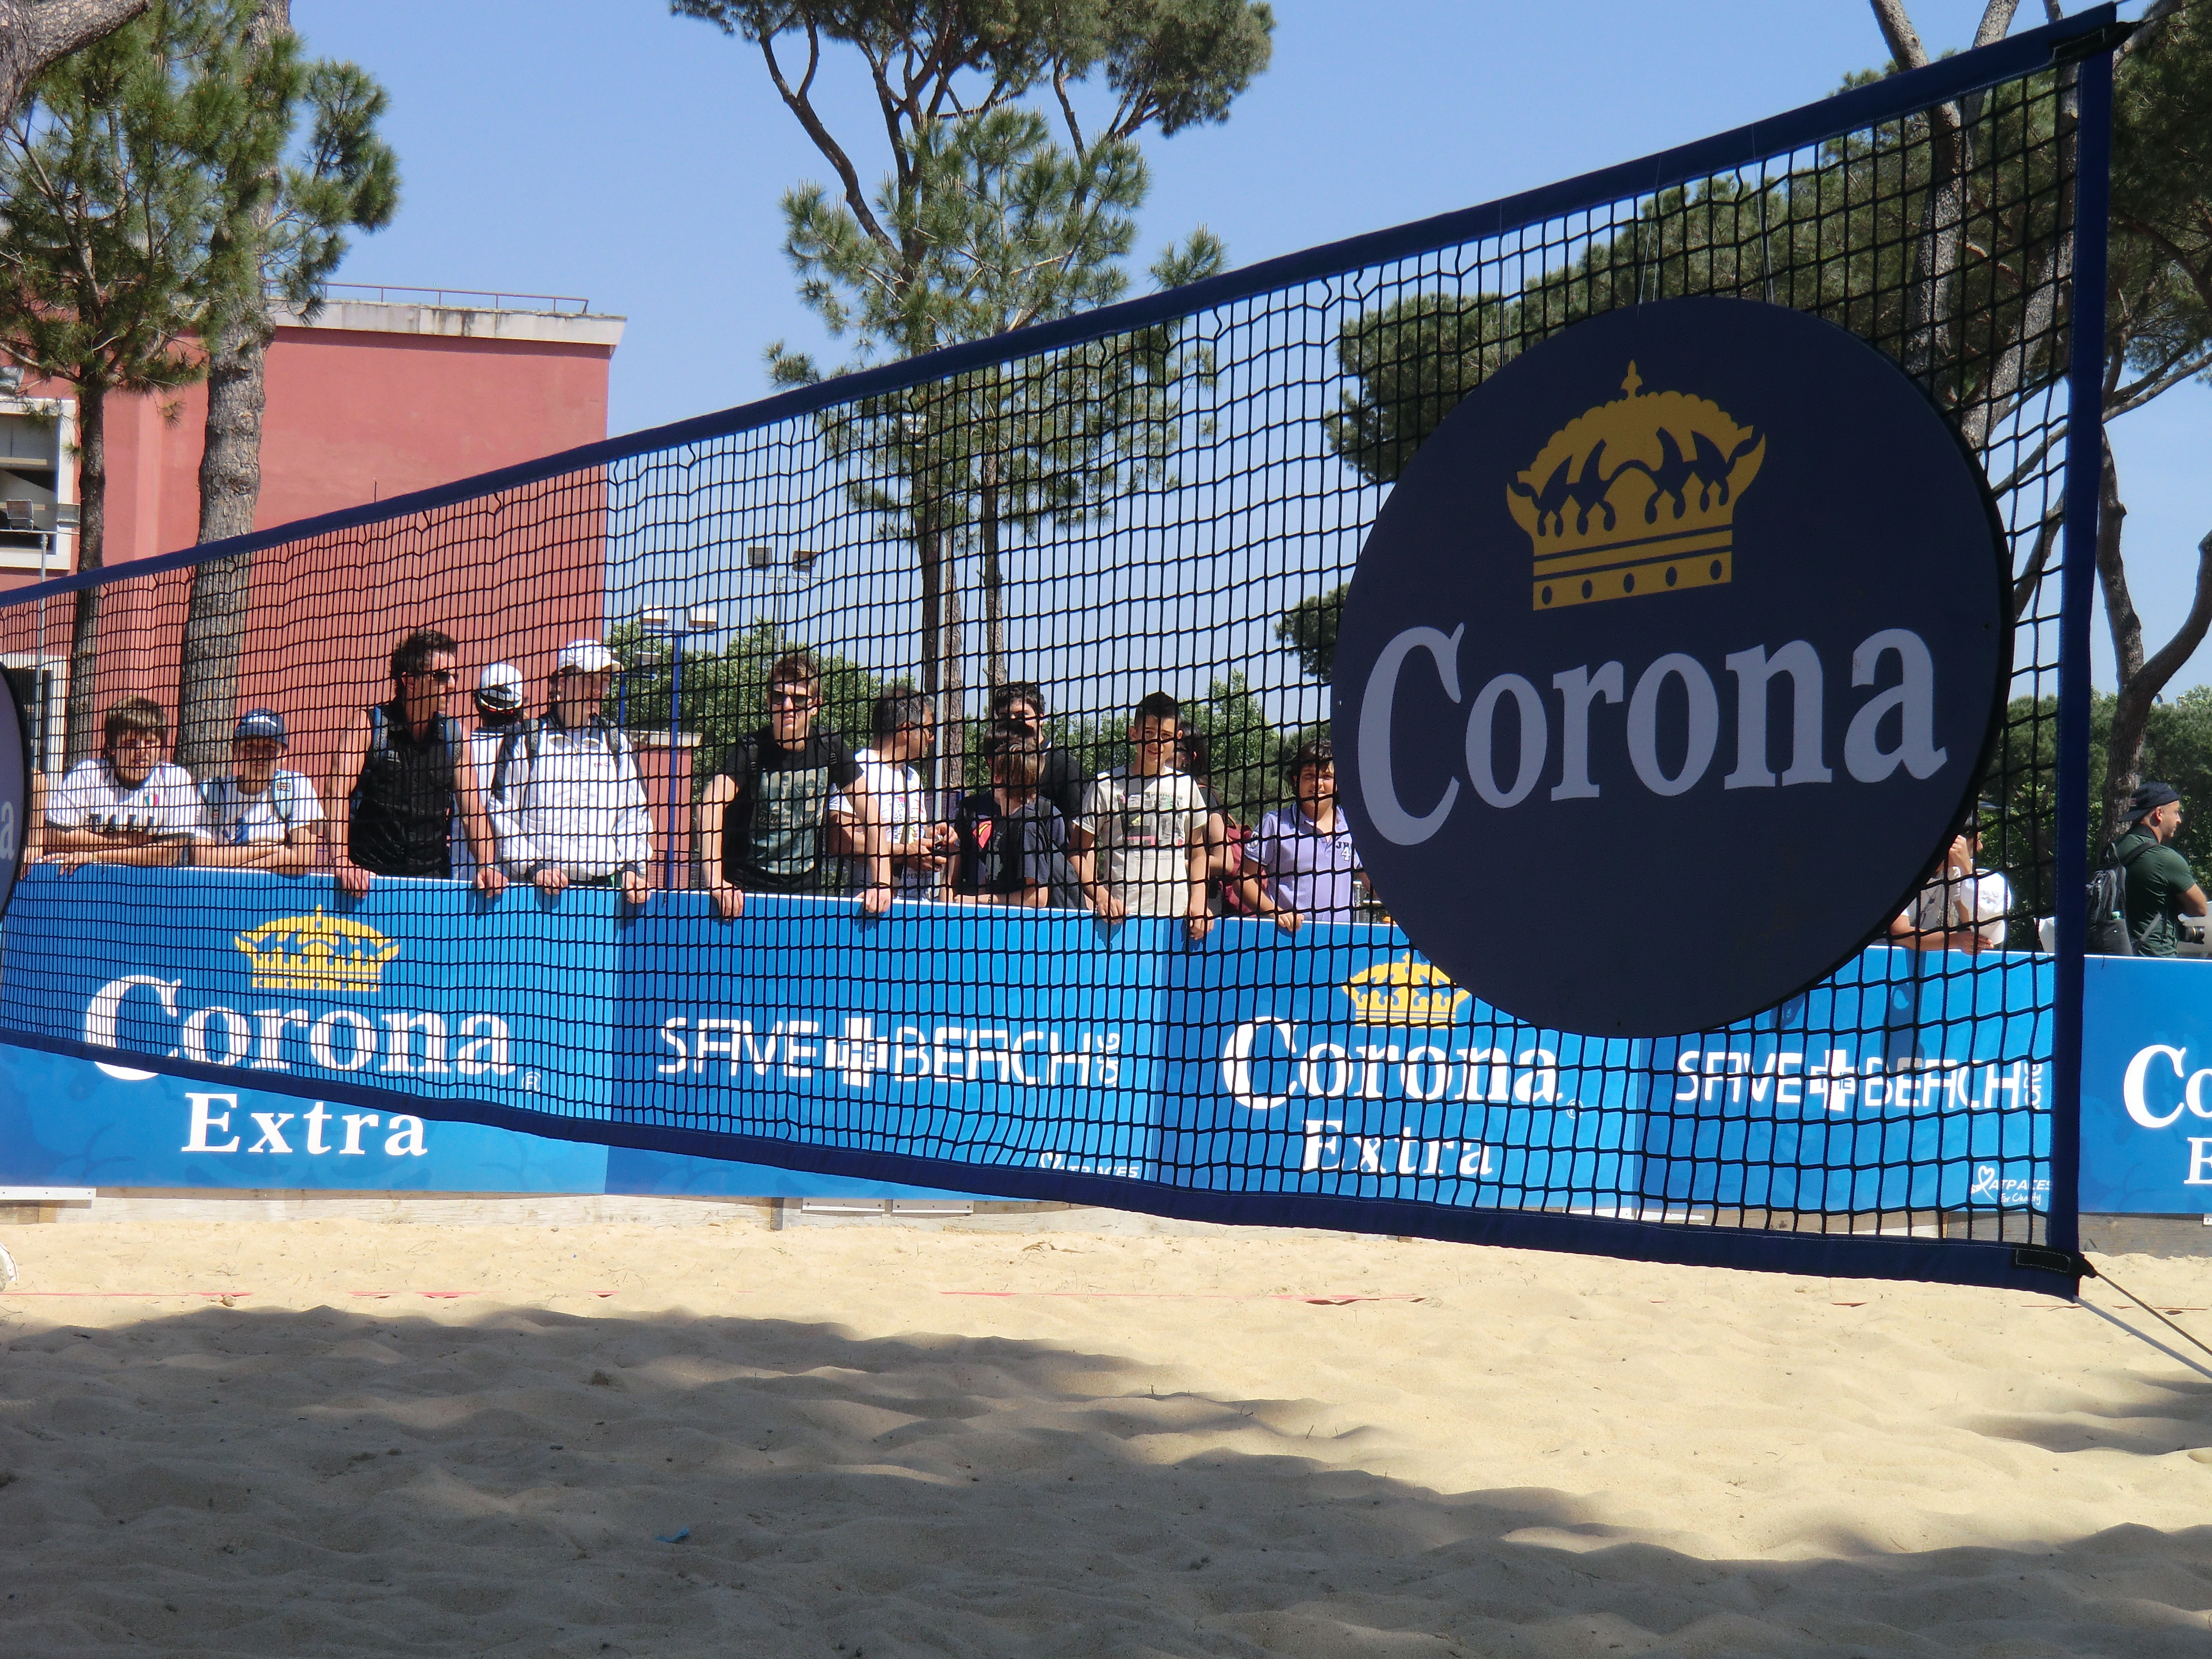 Corona-Save-the-Beach--ATP-Internazionali-BNL-Italia-ad-hoc-solution